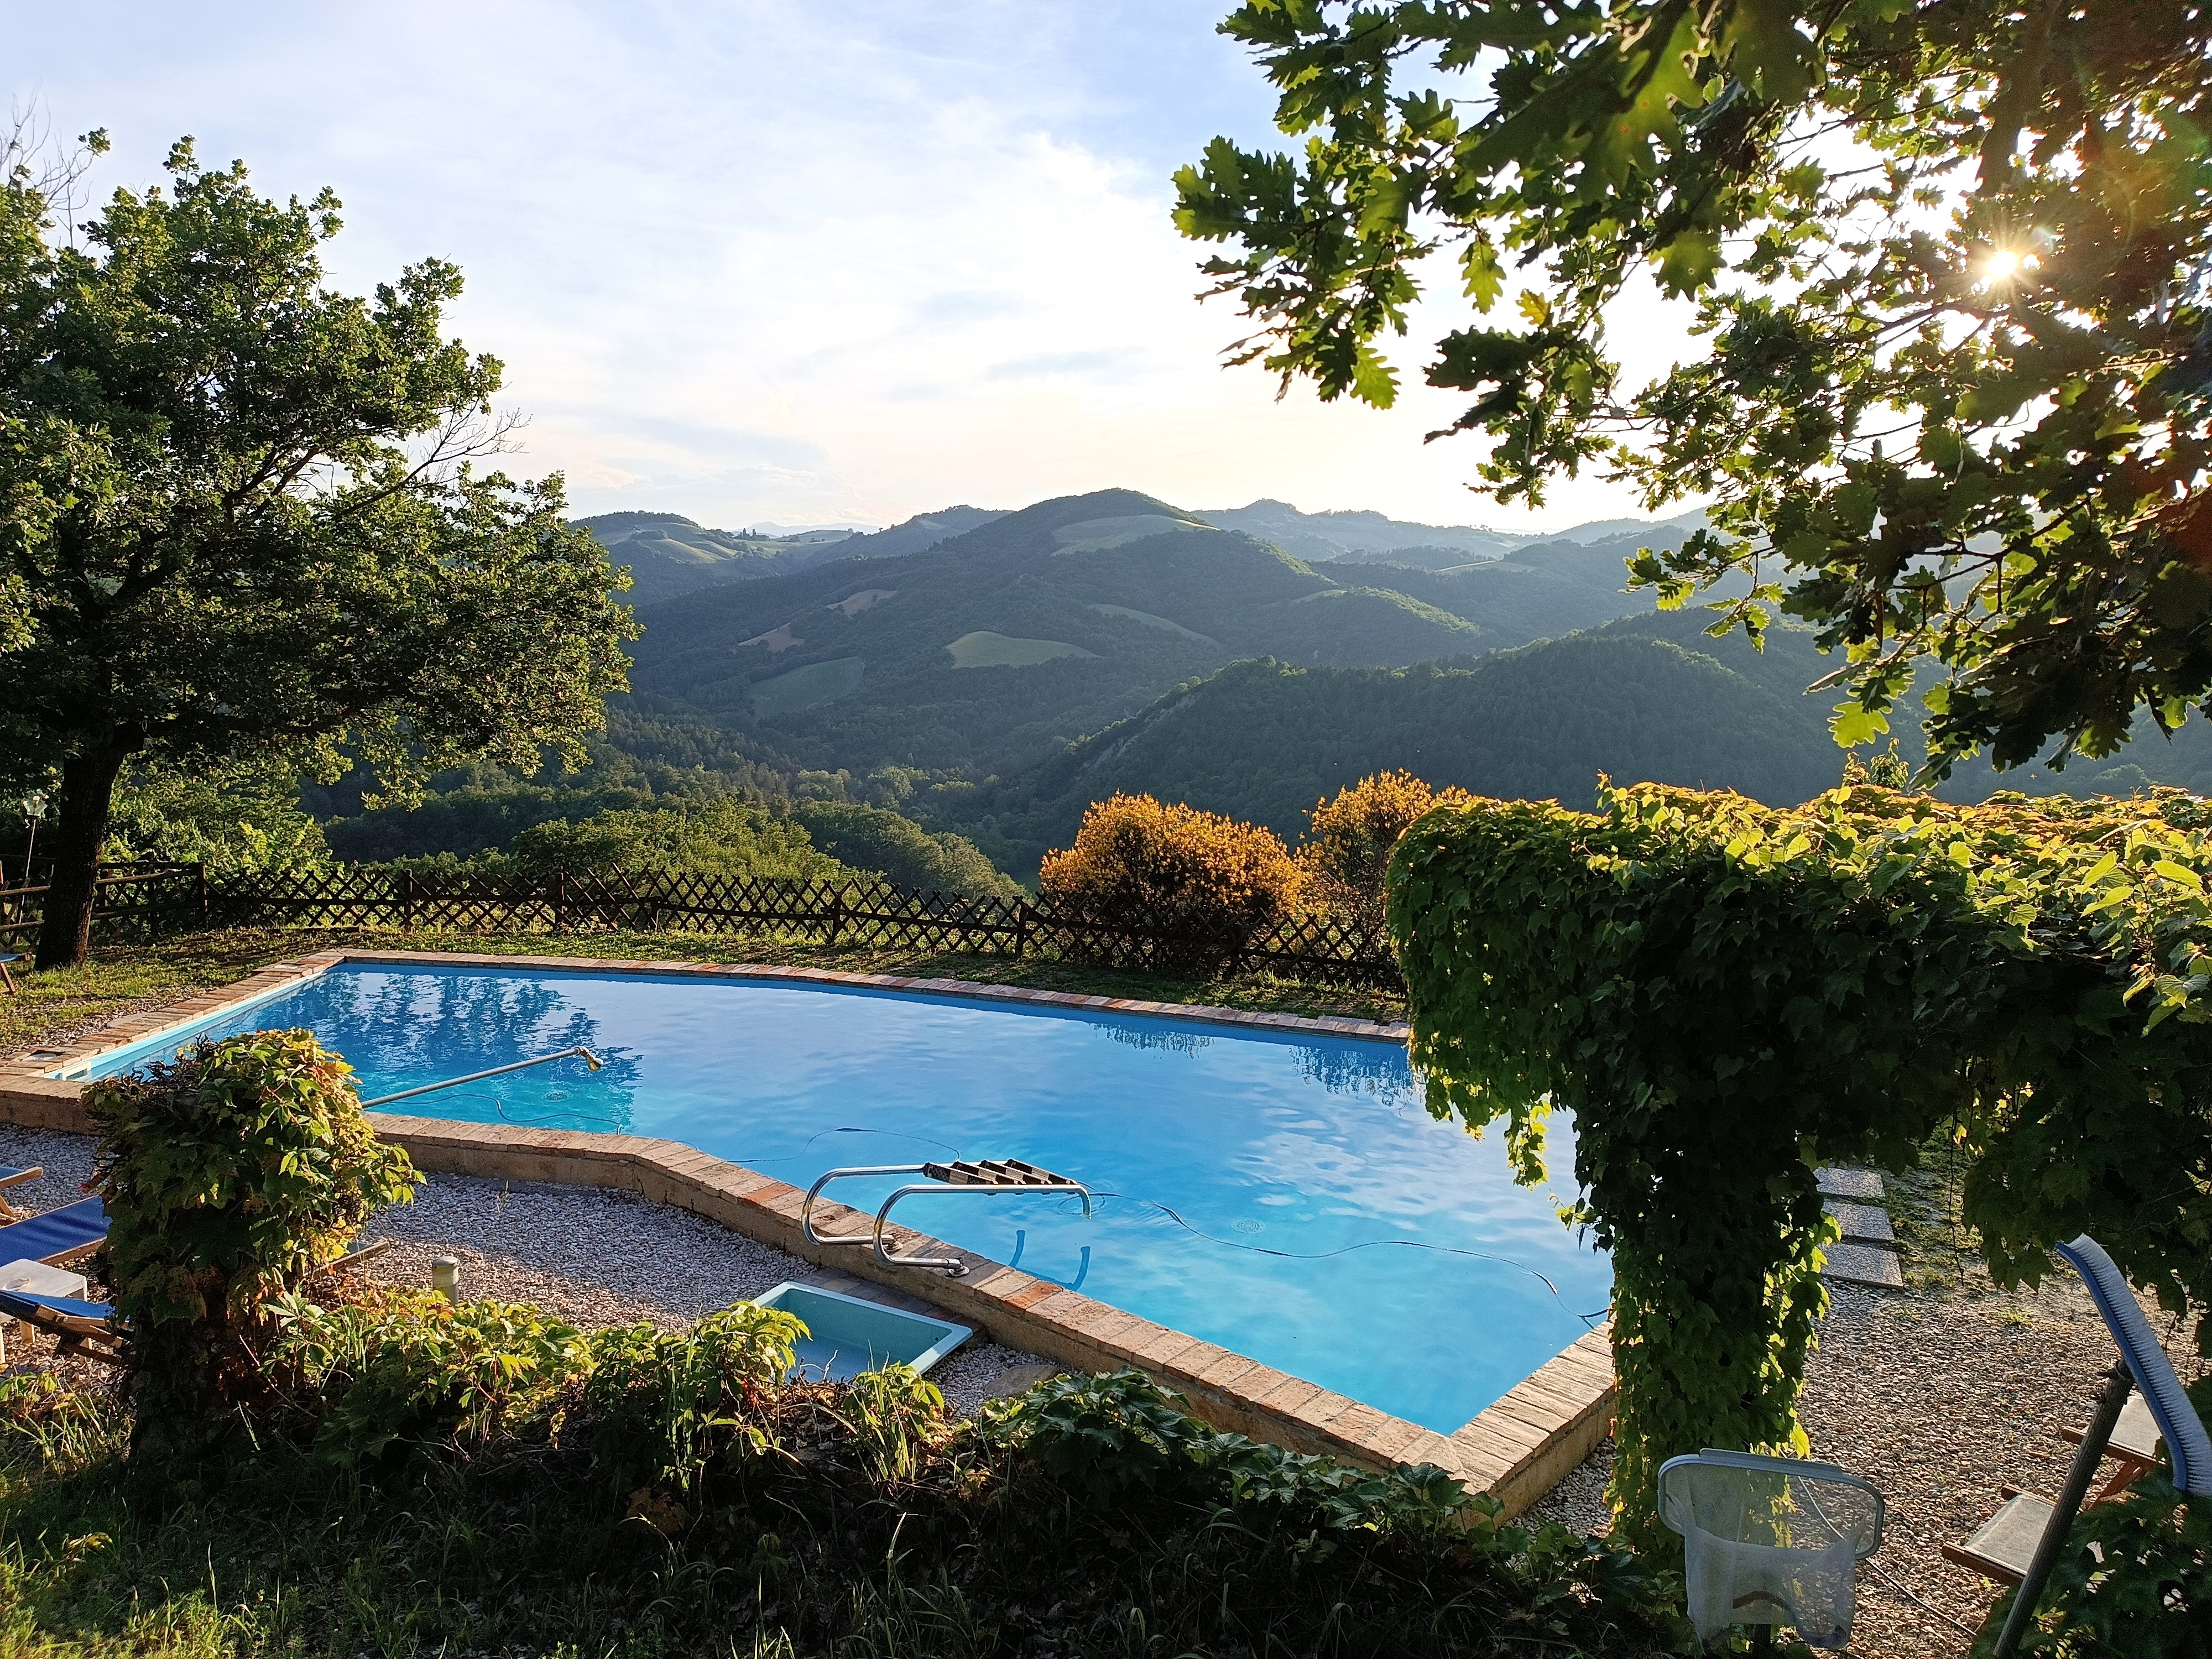 agriturismi a Urbino con piscina agriturismi Marche con piscina agriturismi con piscina panoramica colline marchigiane